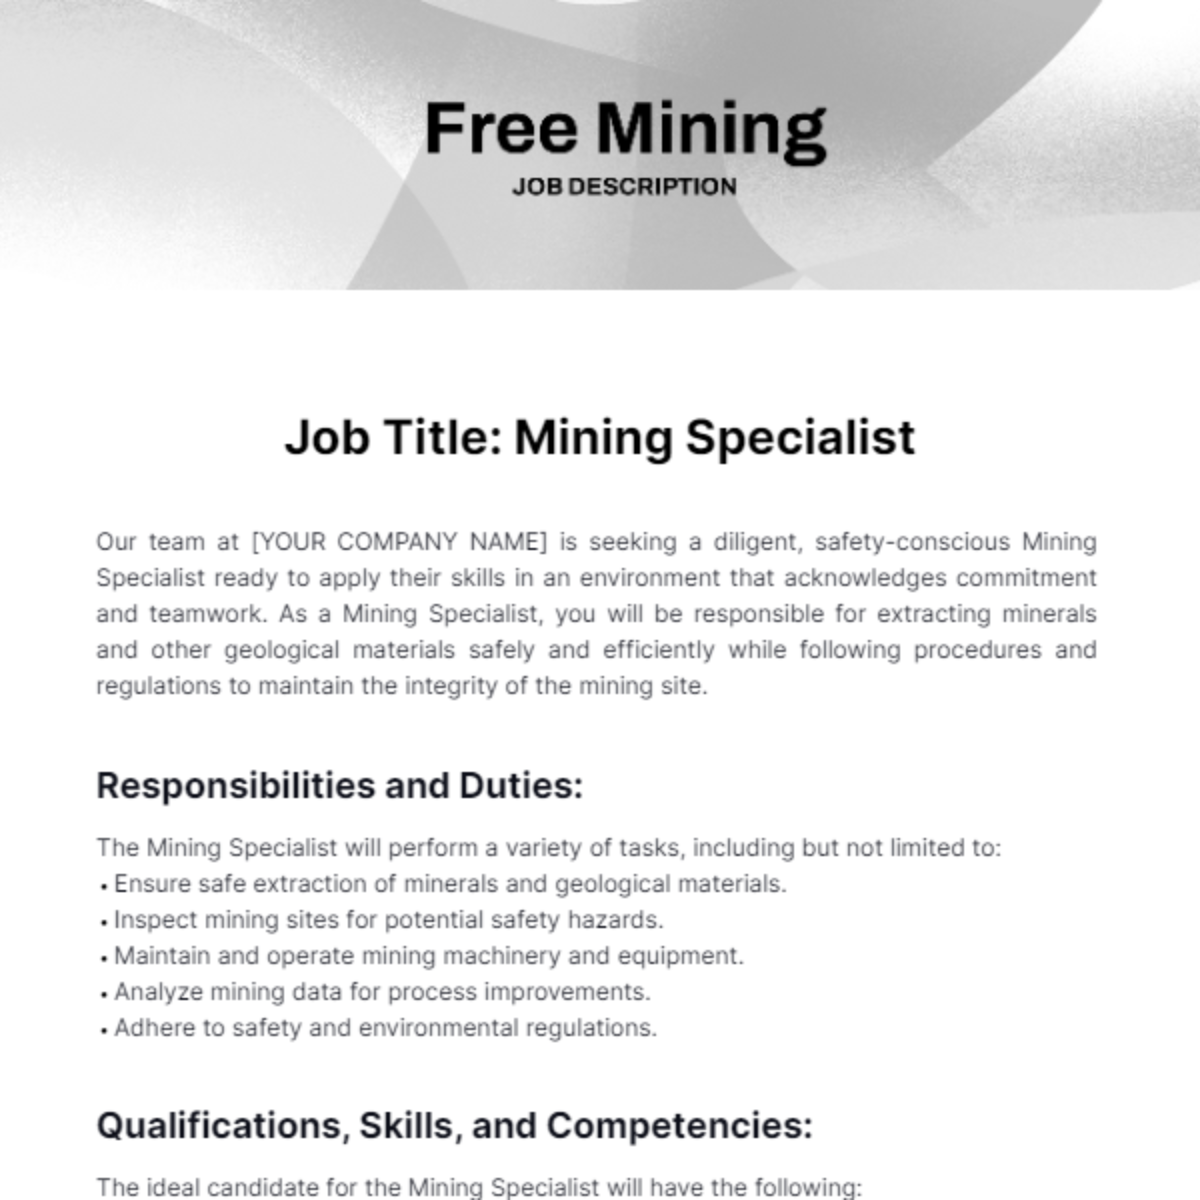 Free Mining Job Description Template